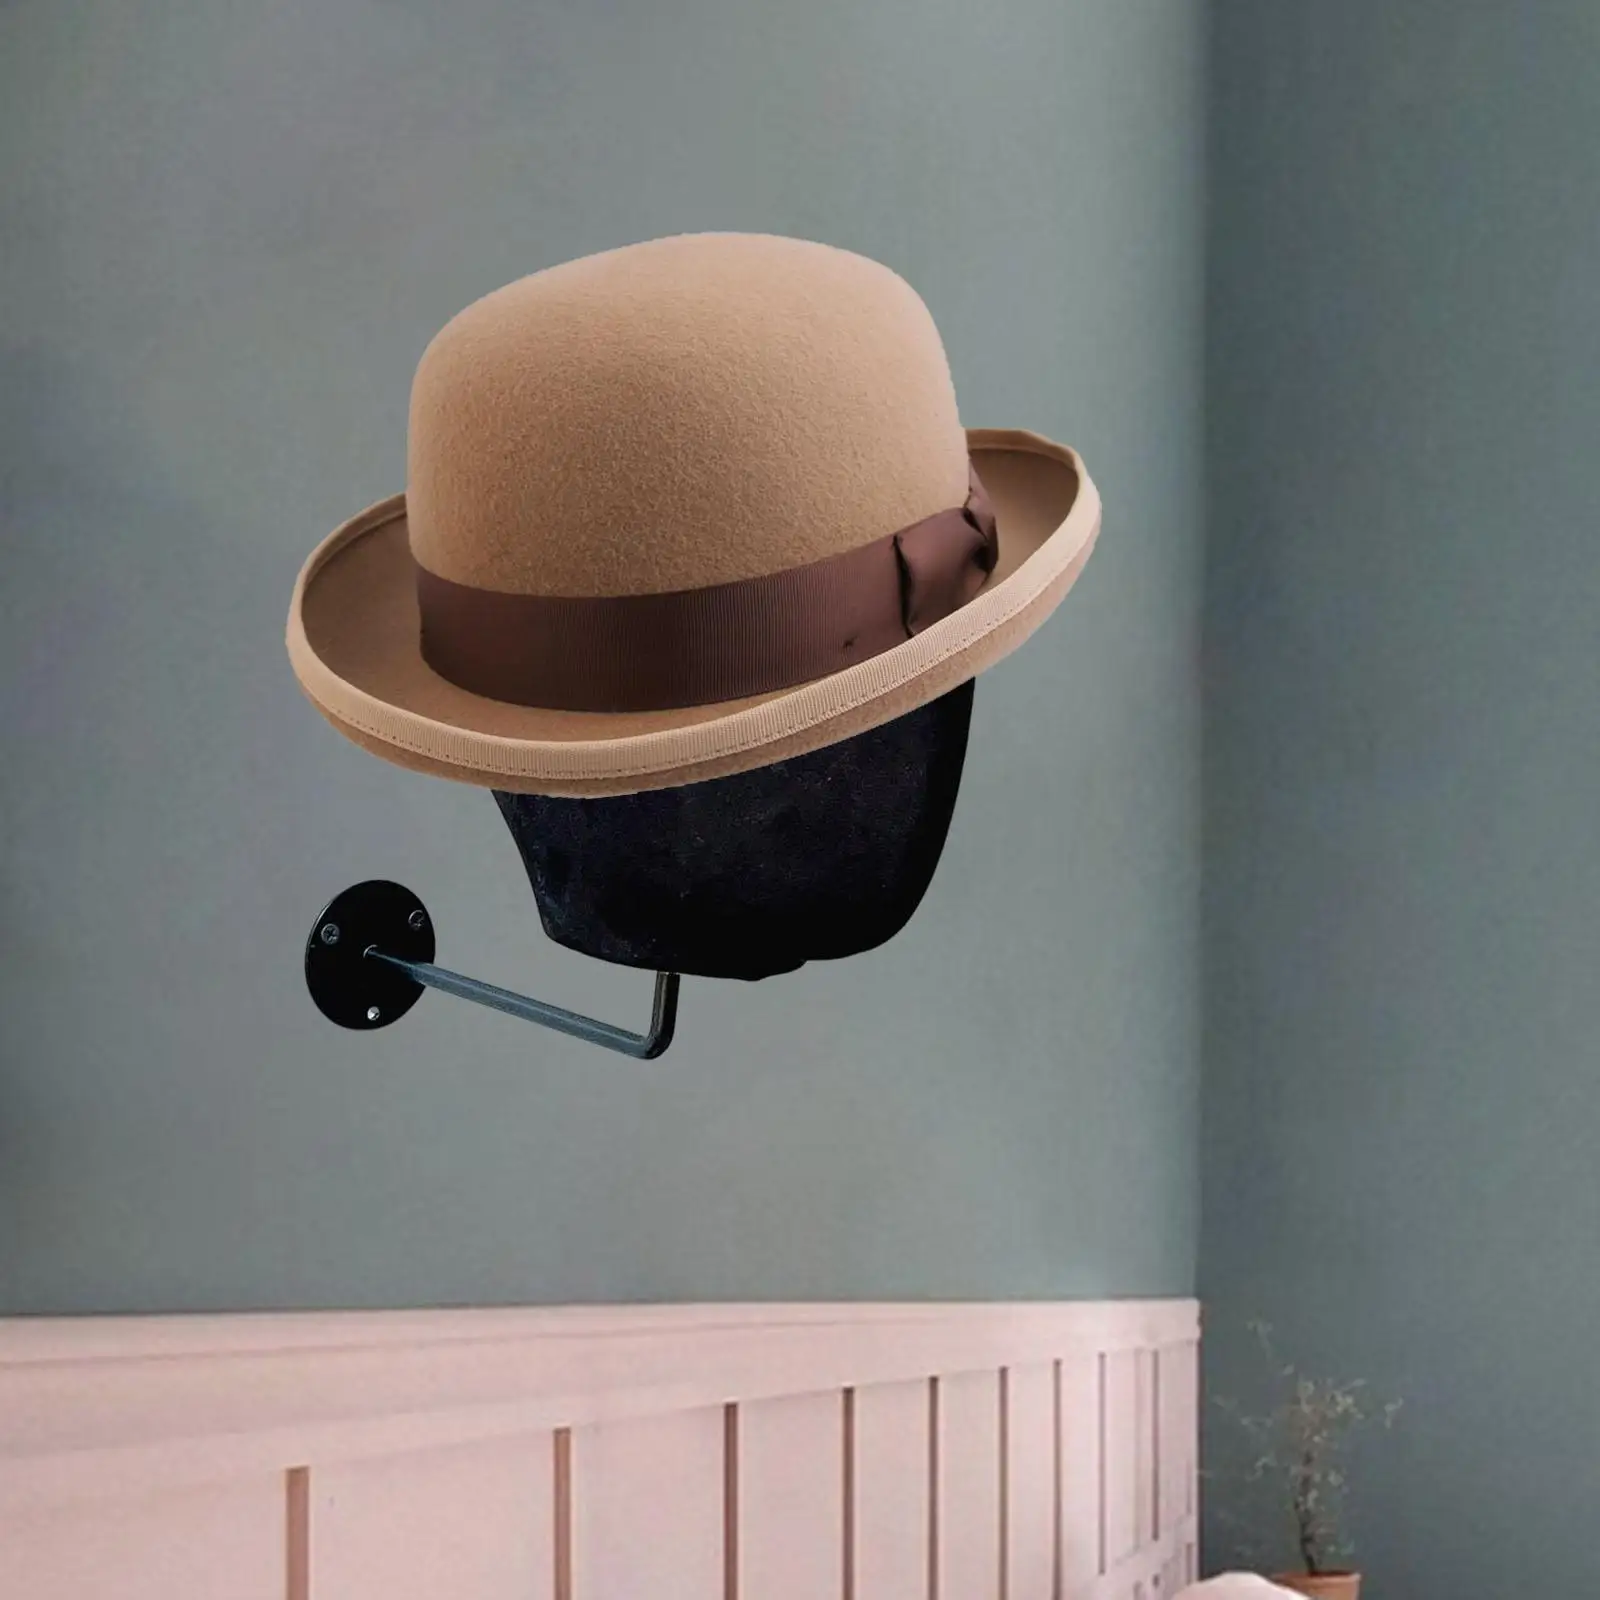 Vintage wall Mounted Mannequin head Hat Rack Decorative Storage Holder for Fedora Home Salon